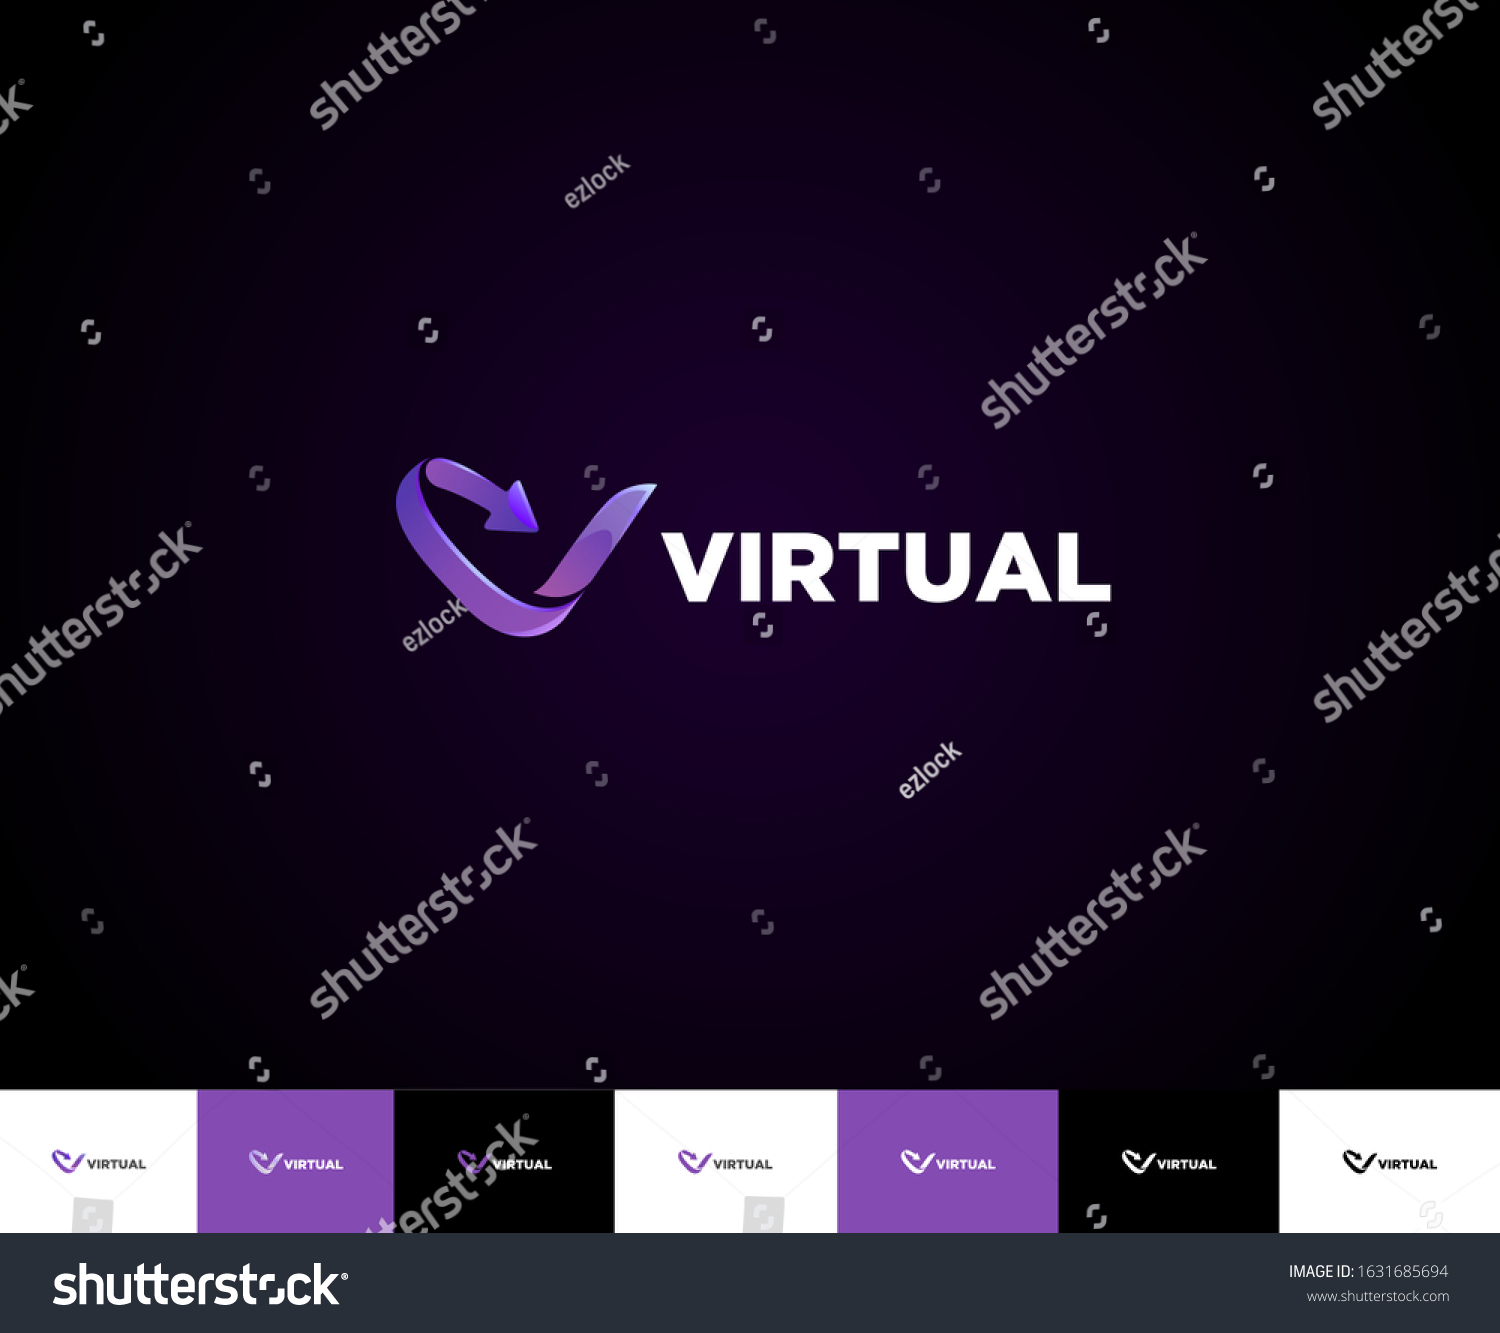 152,058 Virtual logos Images, Stock Photos & Vectors | Shutterstock